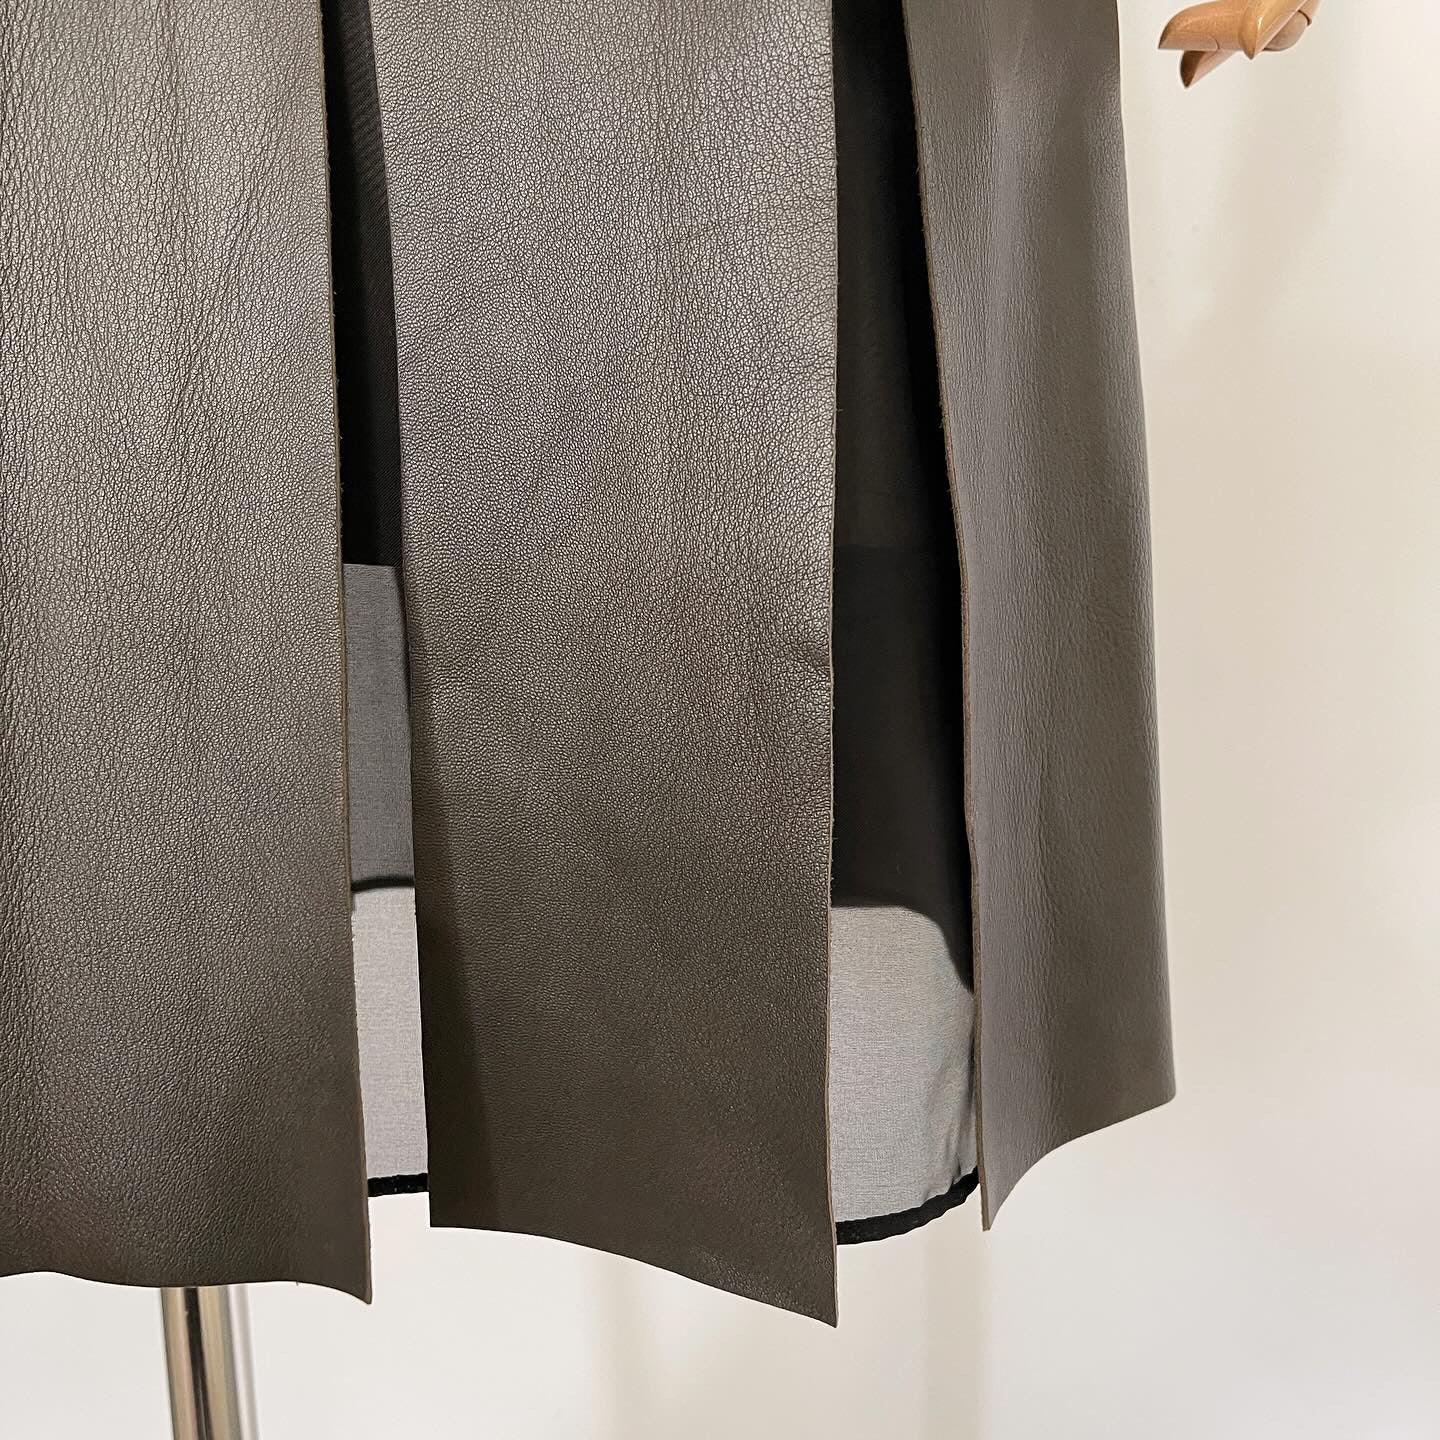 DOROTHEE SCHUMACHER - DOROTHEE SCHUMACHER Leather Skirt - AVVIIVVA.COM